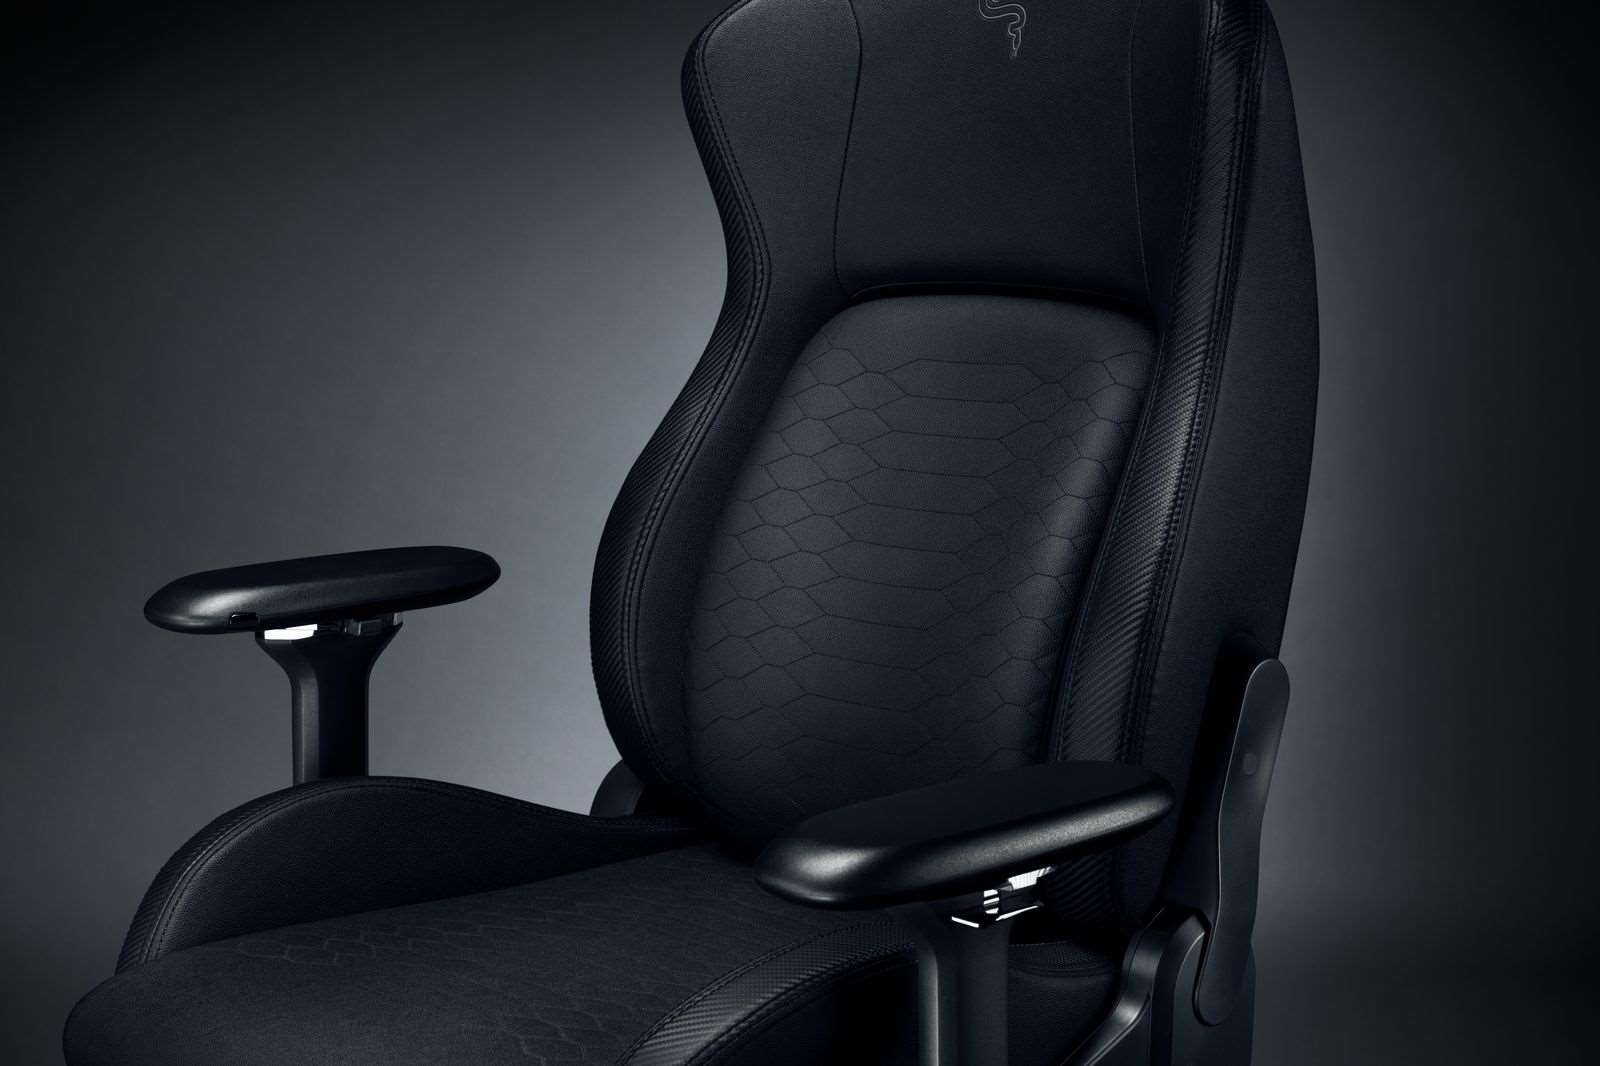 RAZER herní křeslo ISKUR Gaming Chair,  XL black/ černá9 